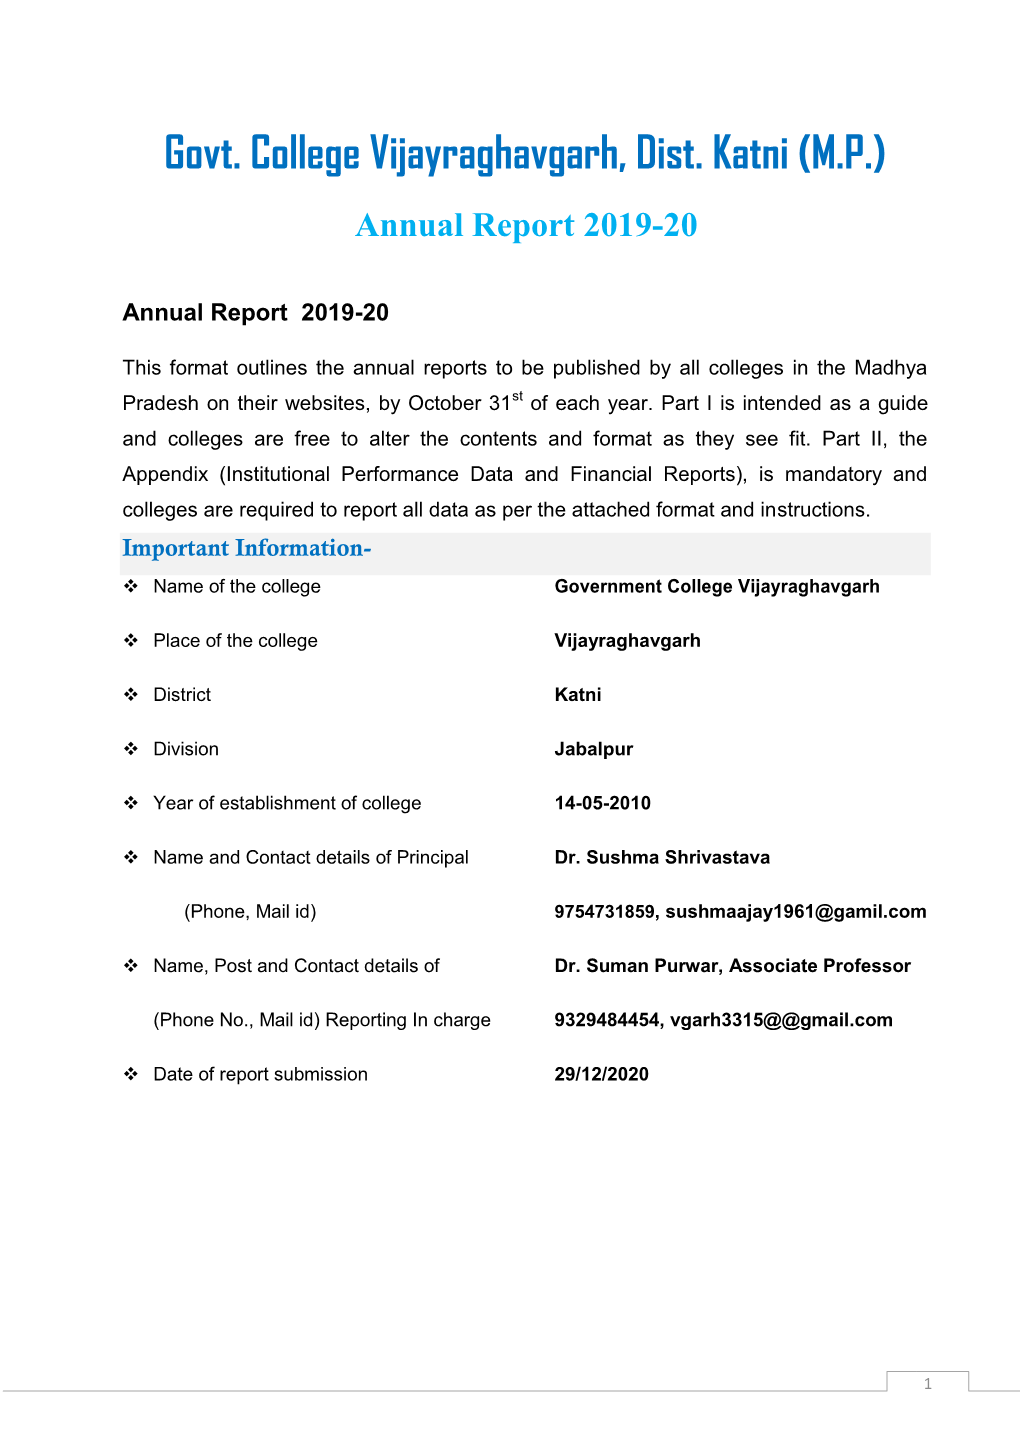 Govt. College Vijayraghavgarh, Dist. Katni (M.P.) Annual Report 2019-20